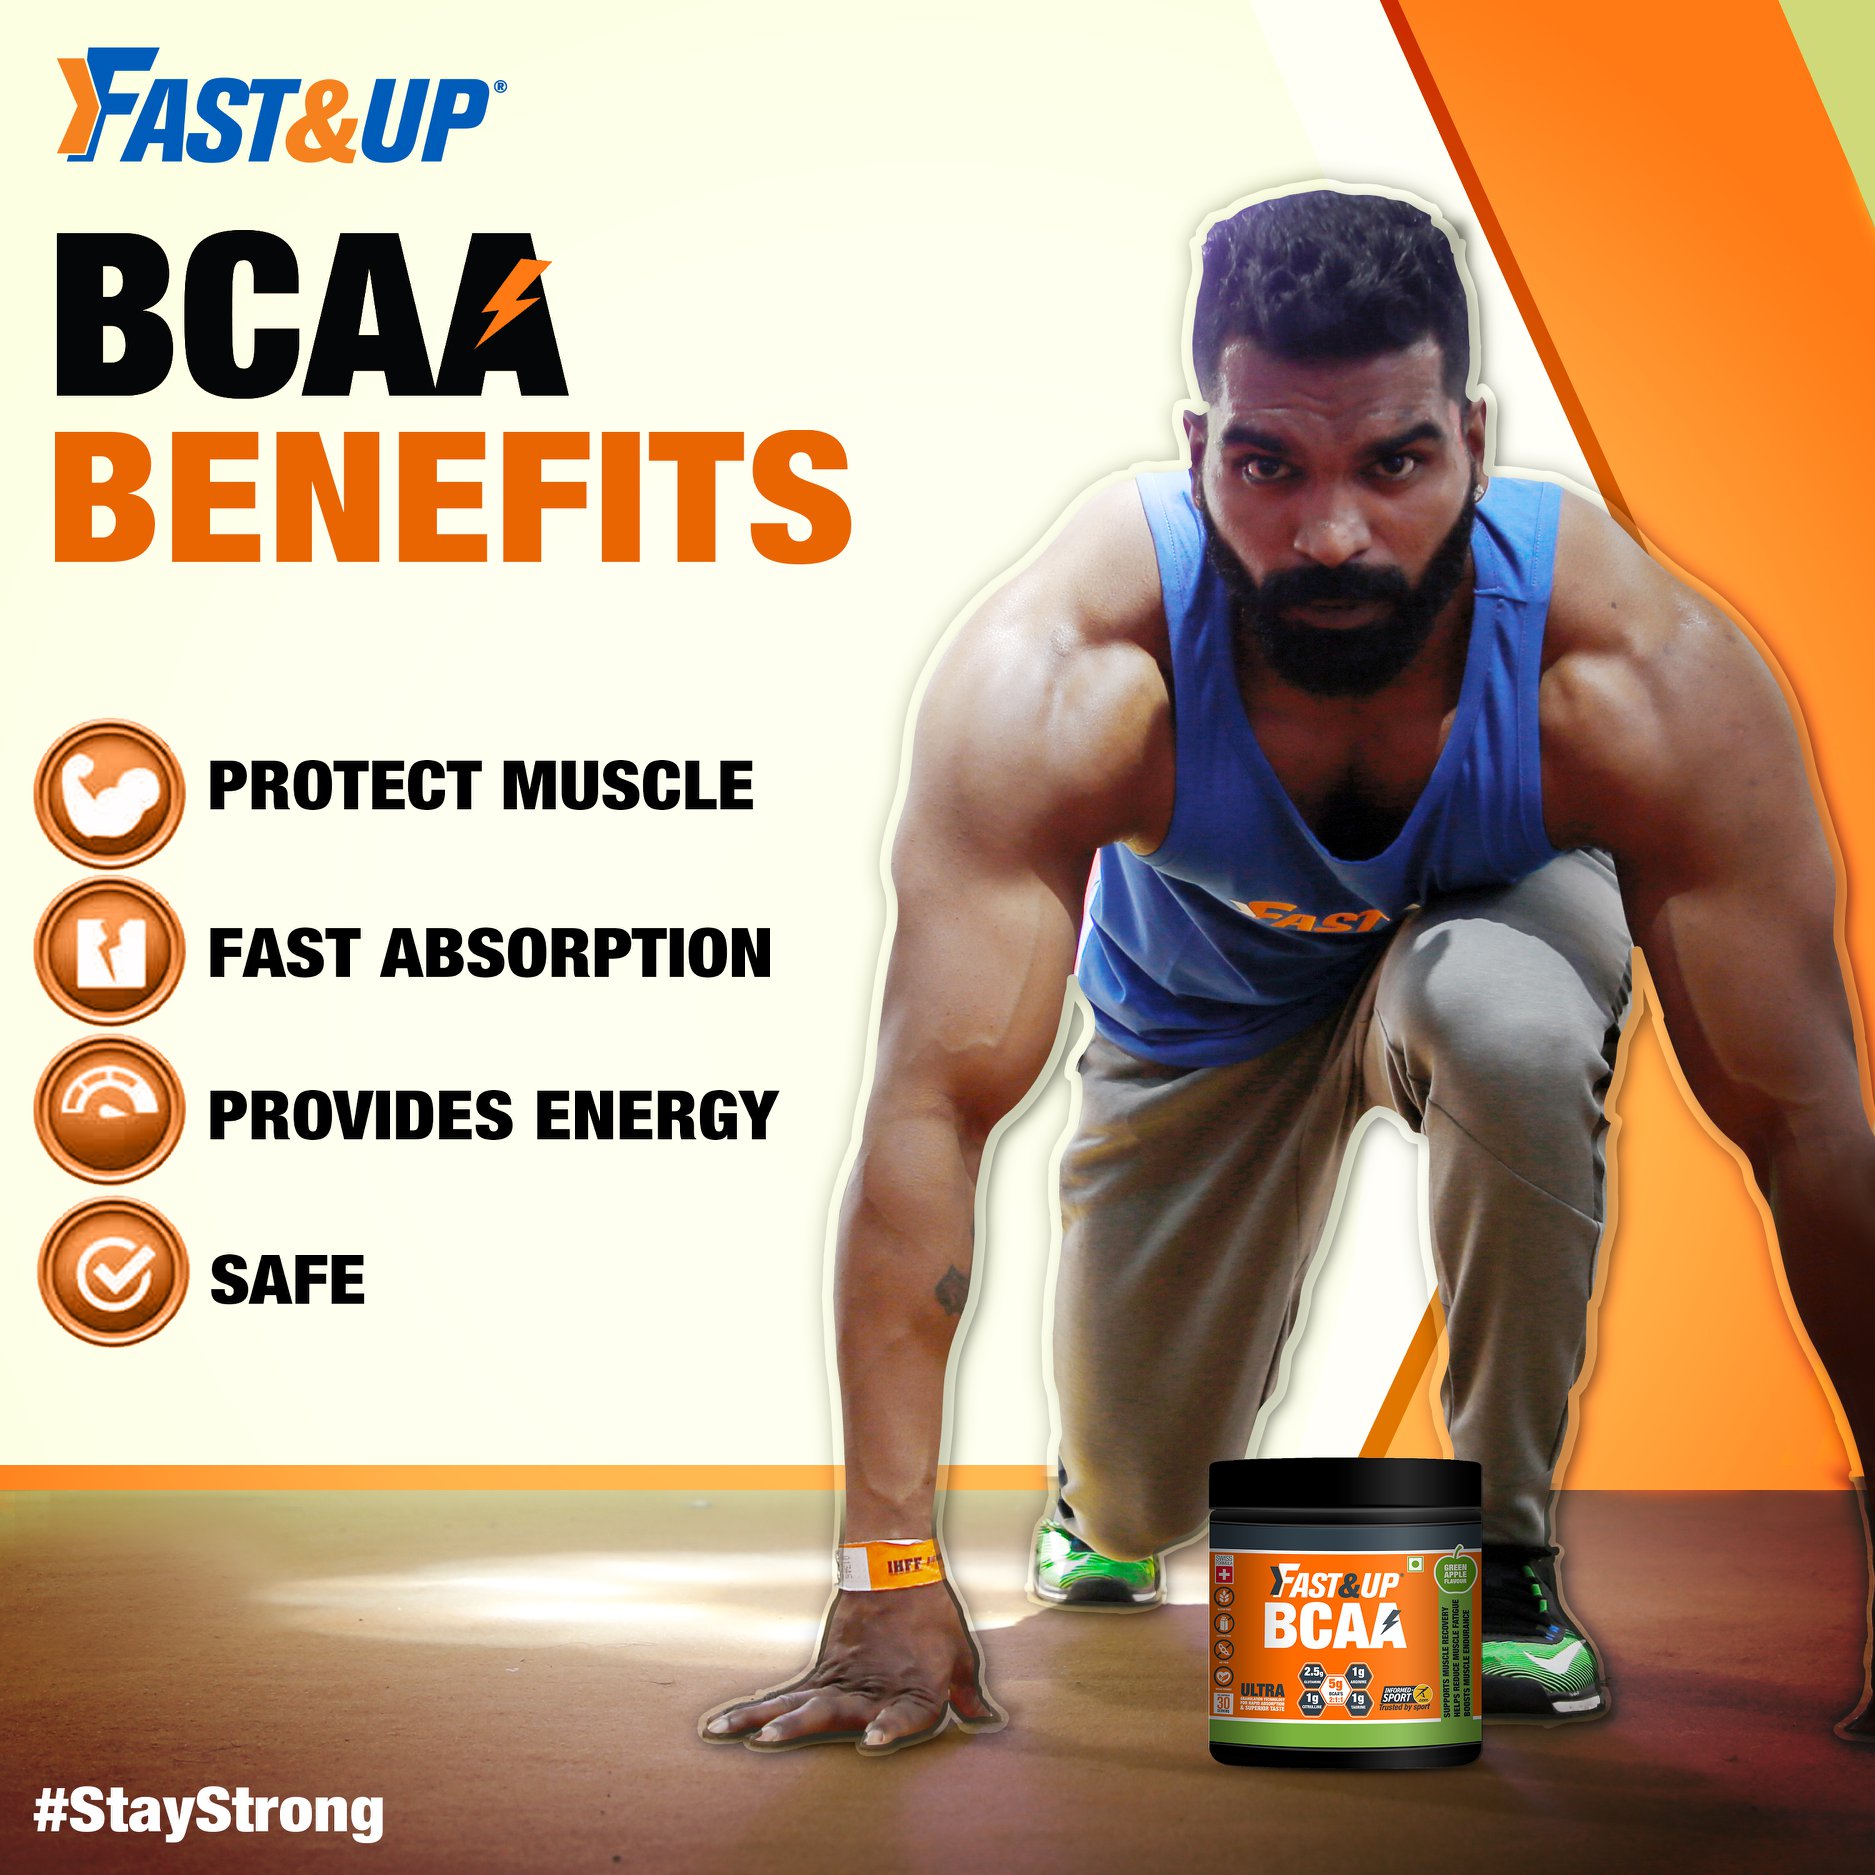 Fast&Up BCAA Benefits